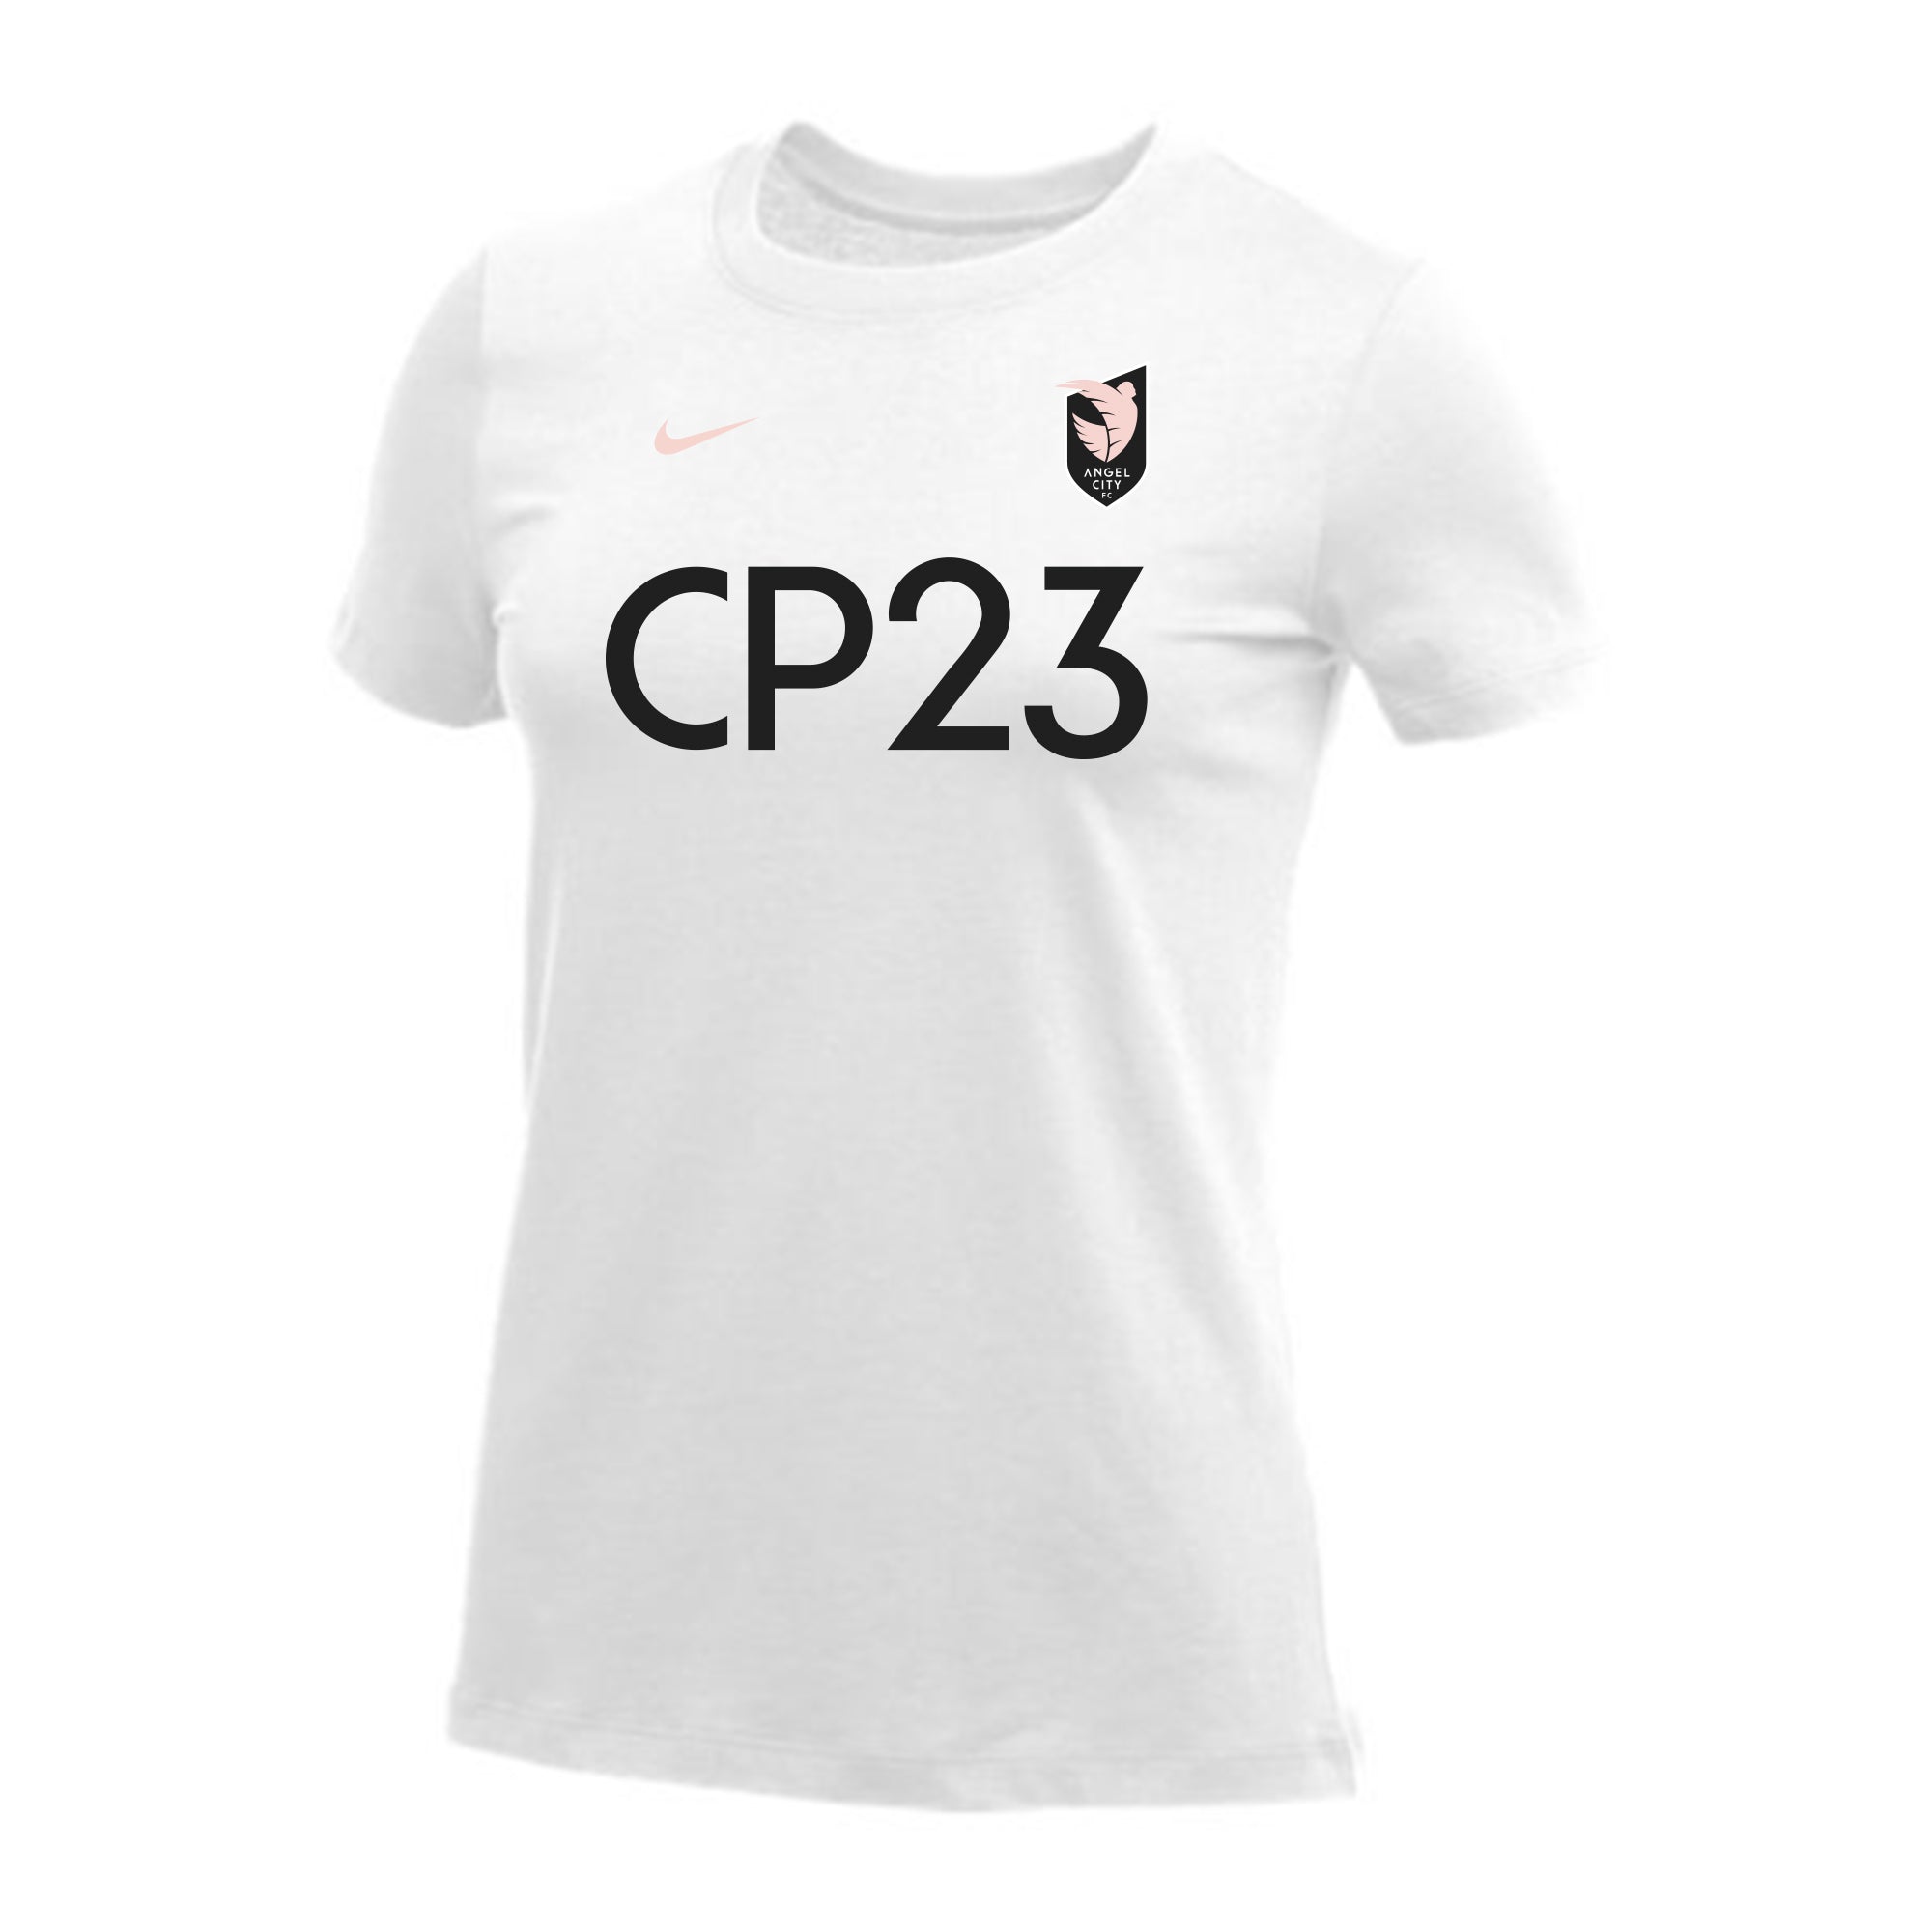 ACFC_CP23_Merch_Nike_Womens_White_front.jpg